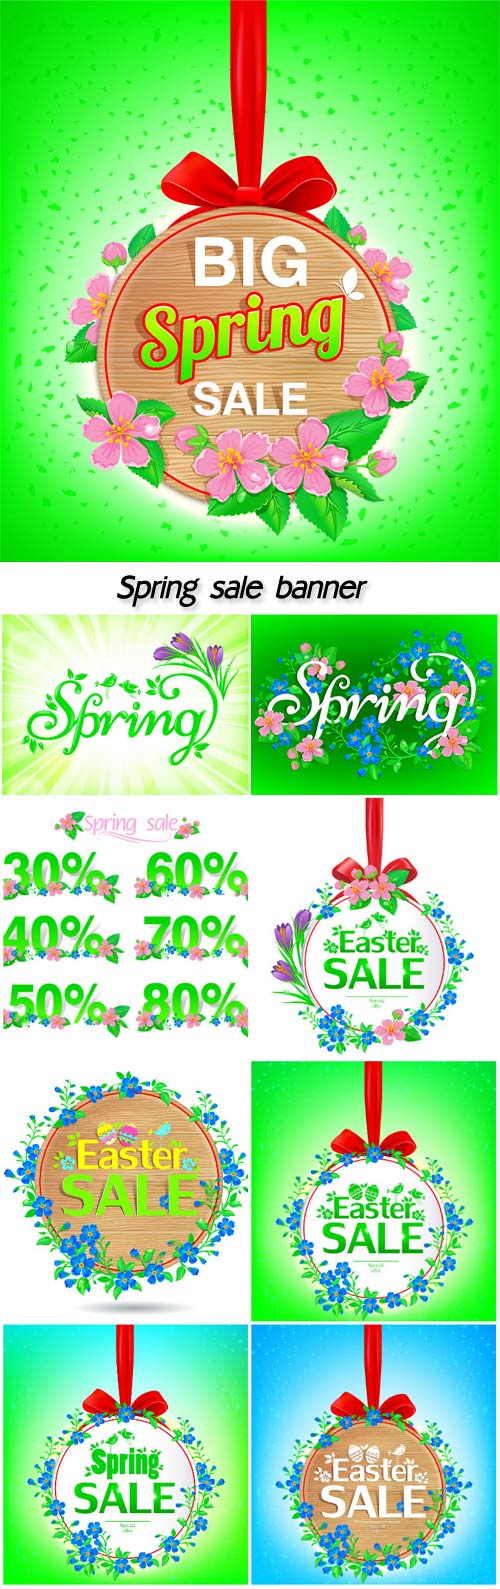 Spring flowers background, sale banner